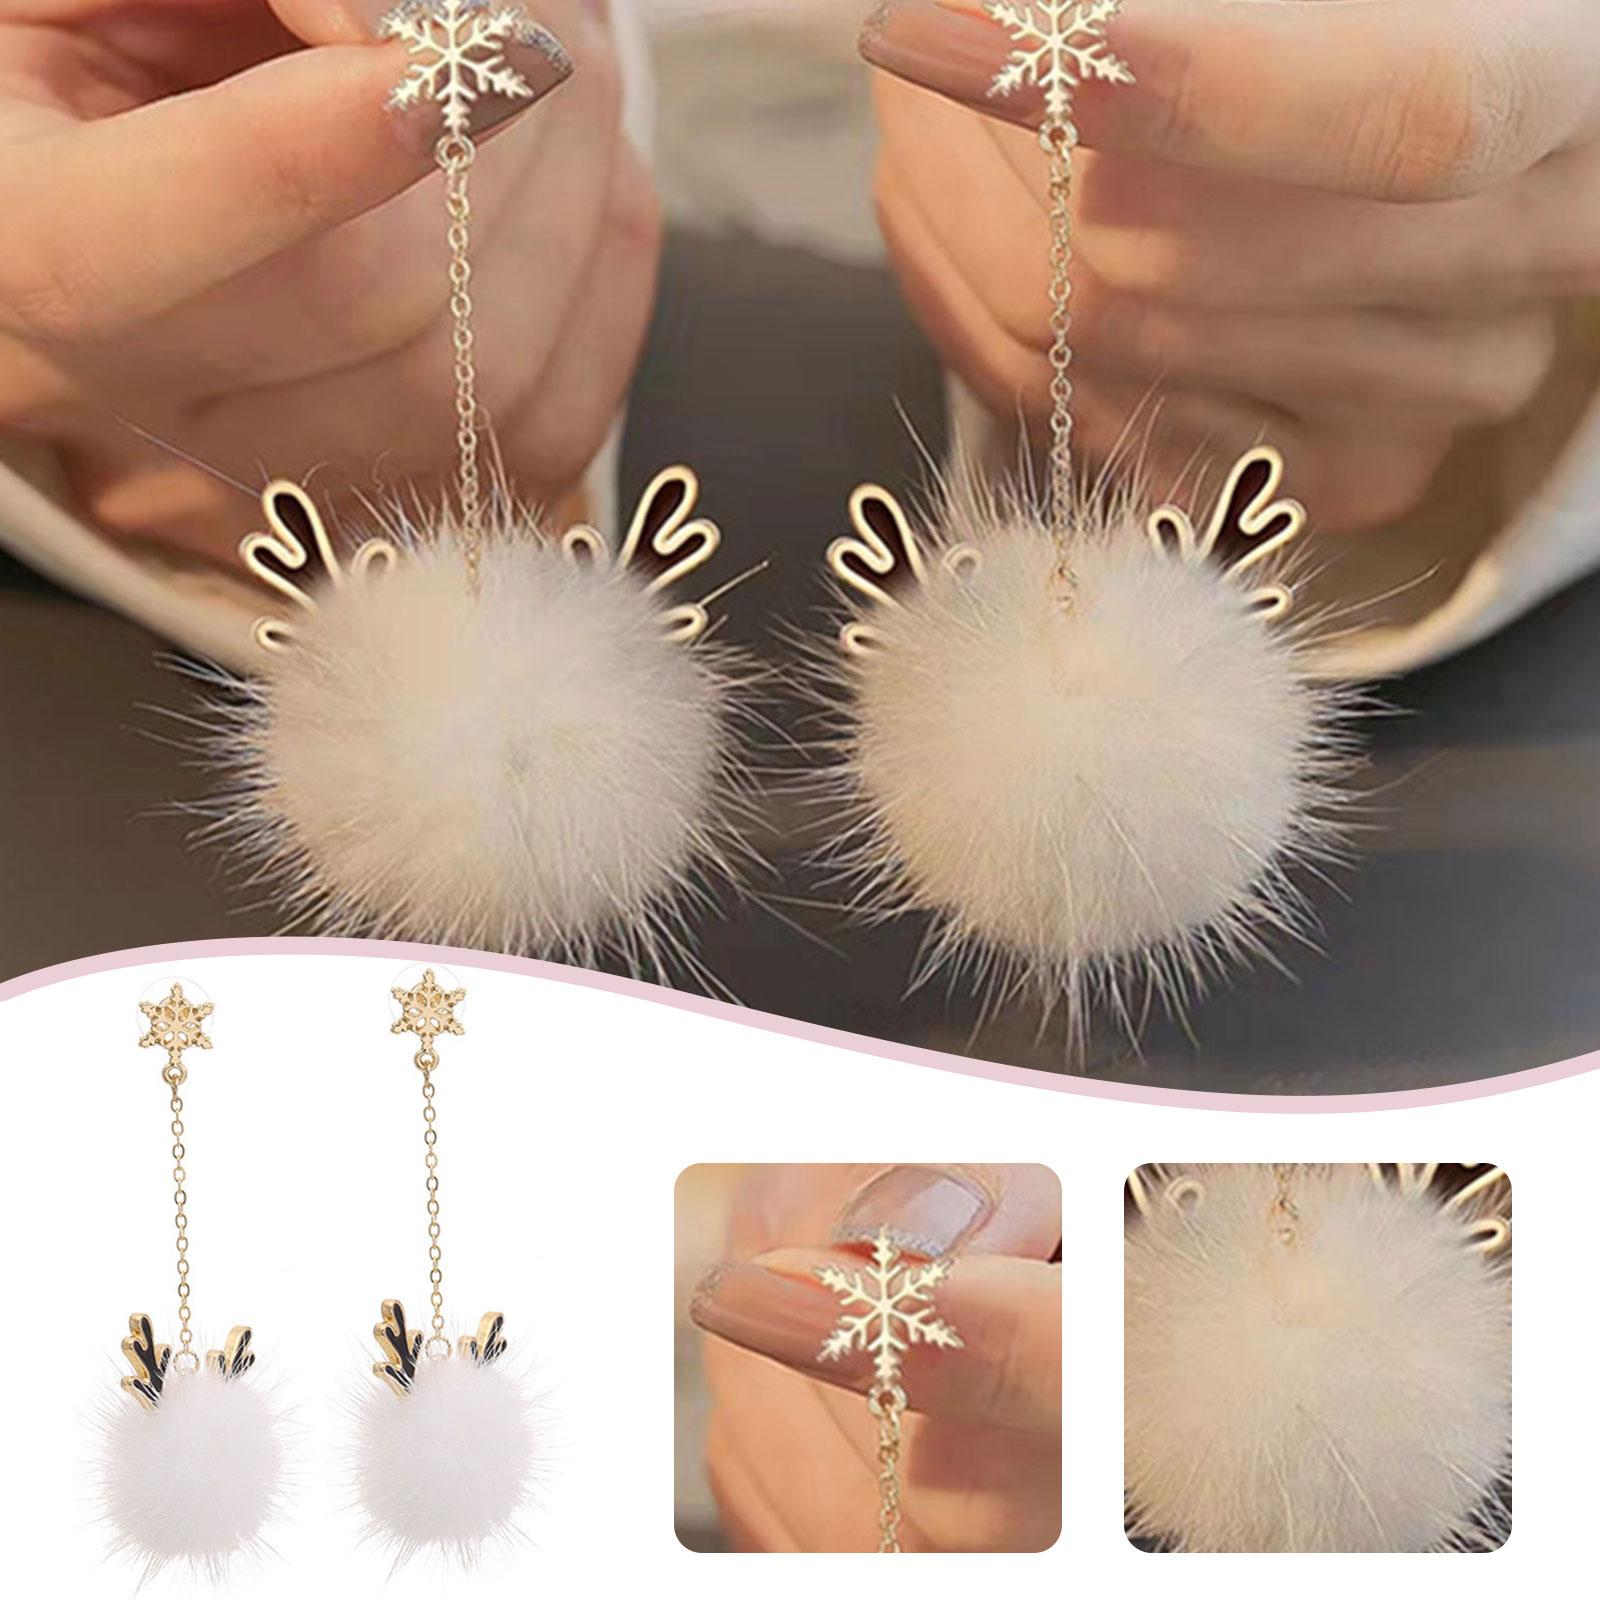 LIUZHIPENG Pom Pom Earrings for Women Girls Cute Snowflake Antler Pompom Dangle Earring Pierced Ear Stud Drops Christmas Xmas Holiday Jewelry G2Q9 - image 3 of 9